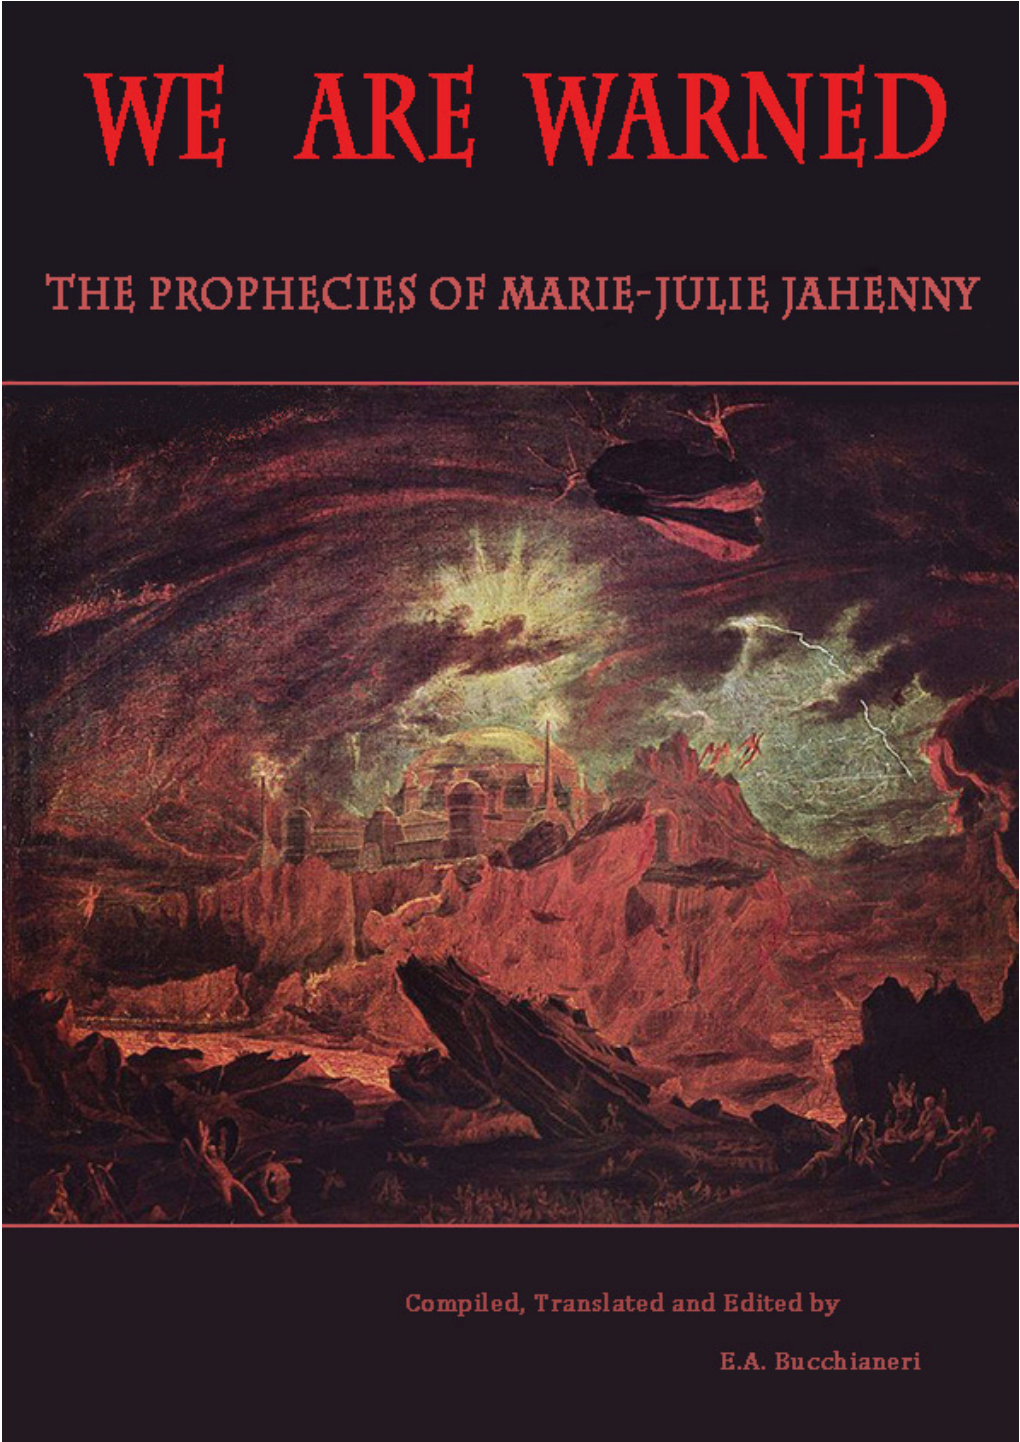 The Prophecies of Marie-Julie Jahenny